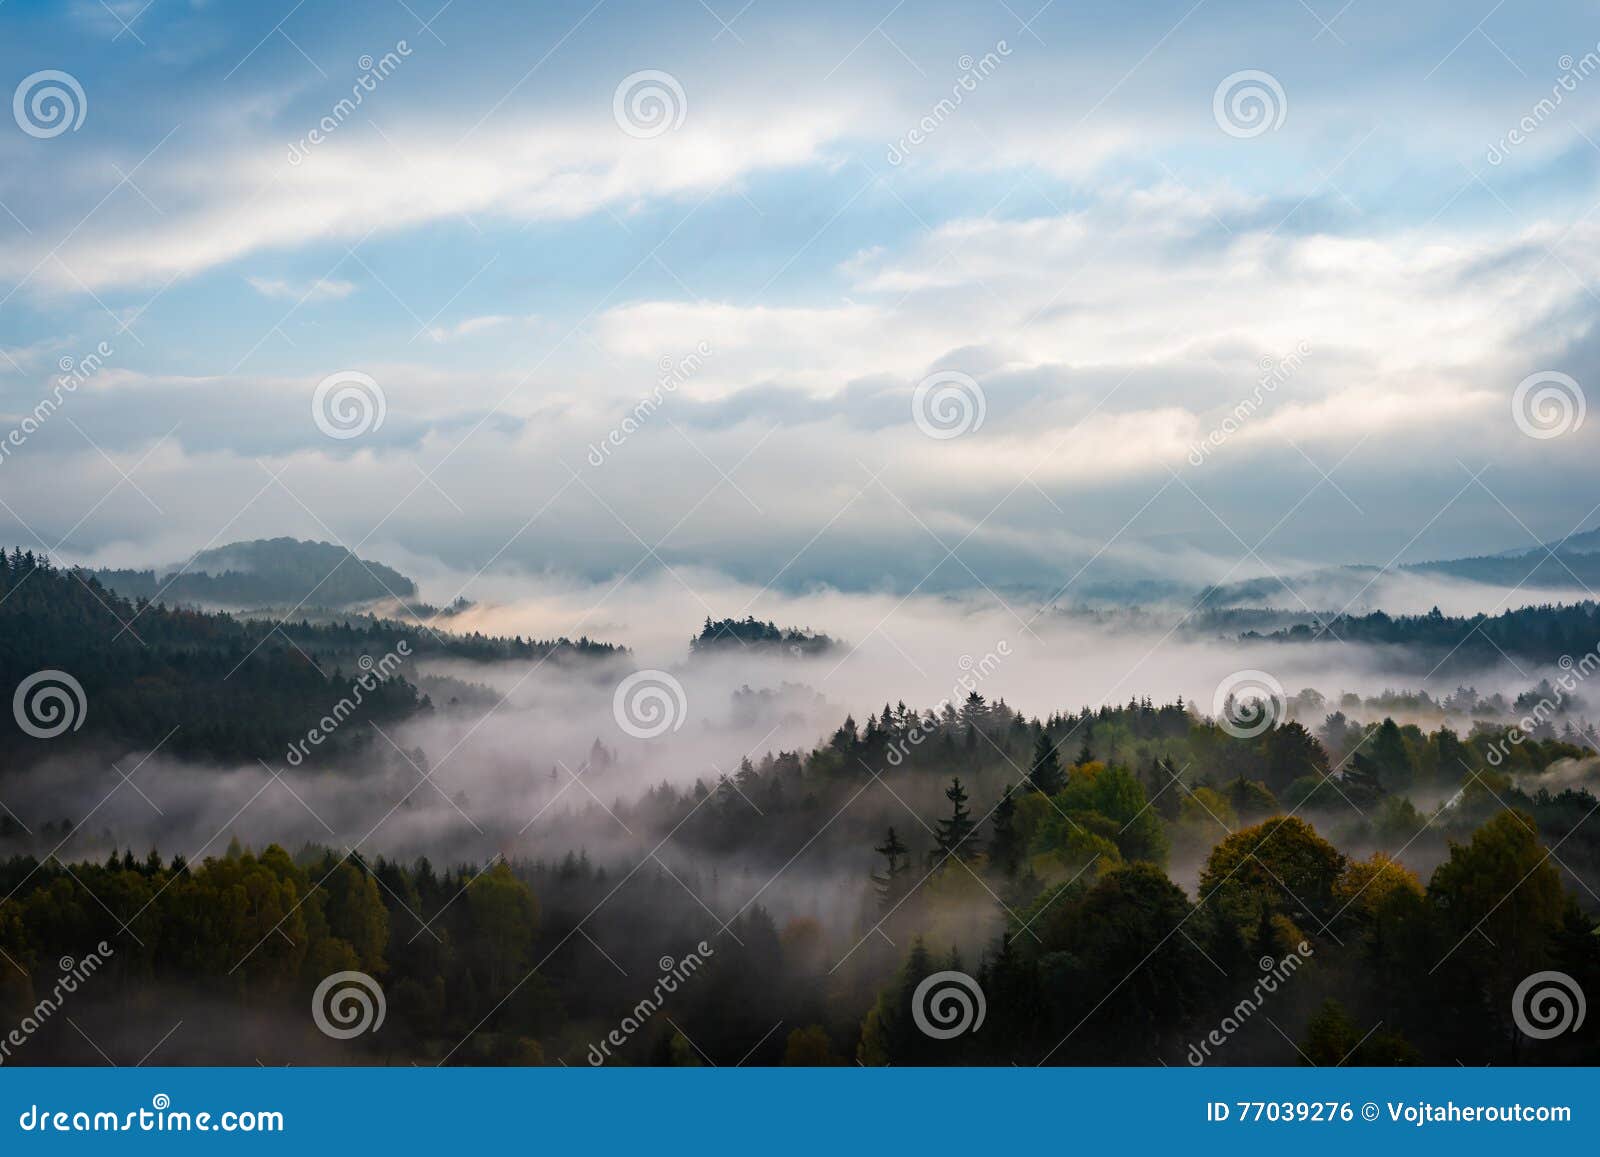 foggy forests of bohemian switzerland, czech republic